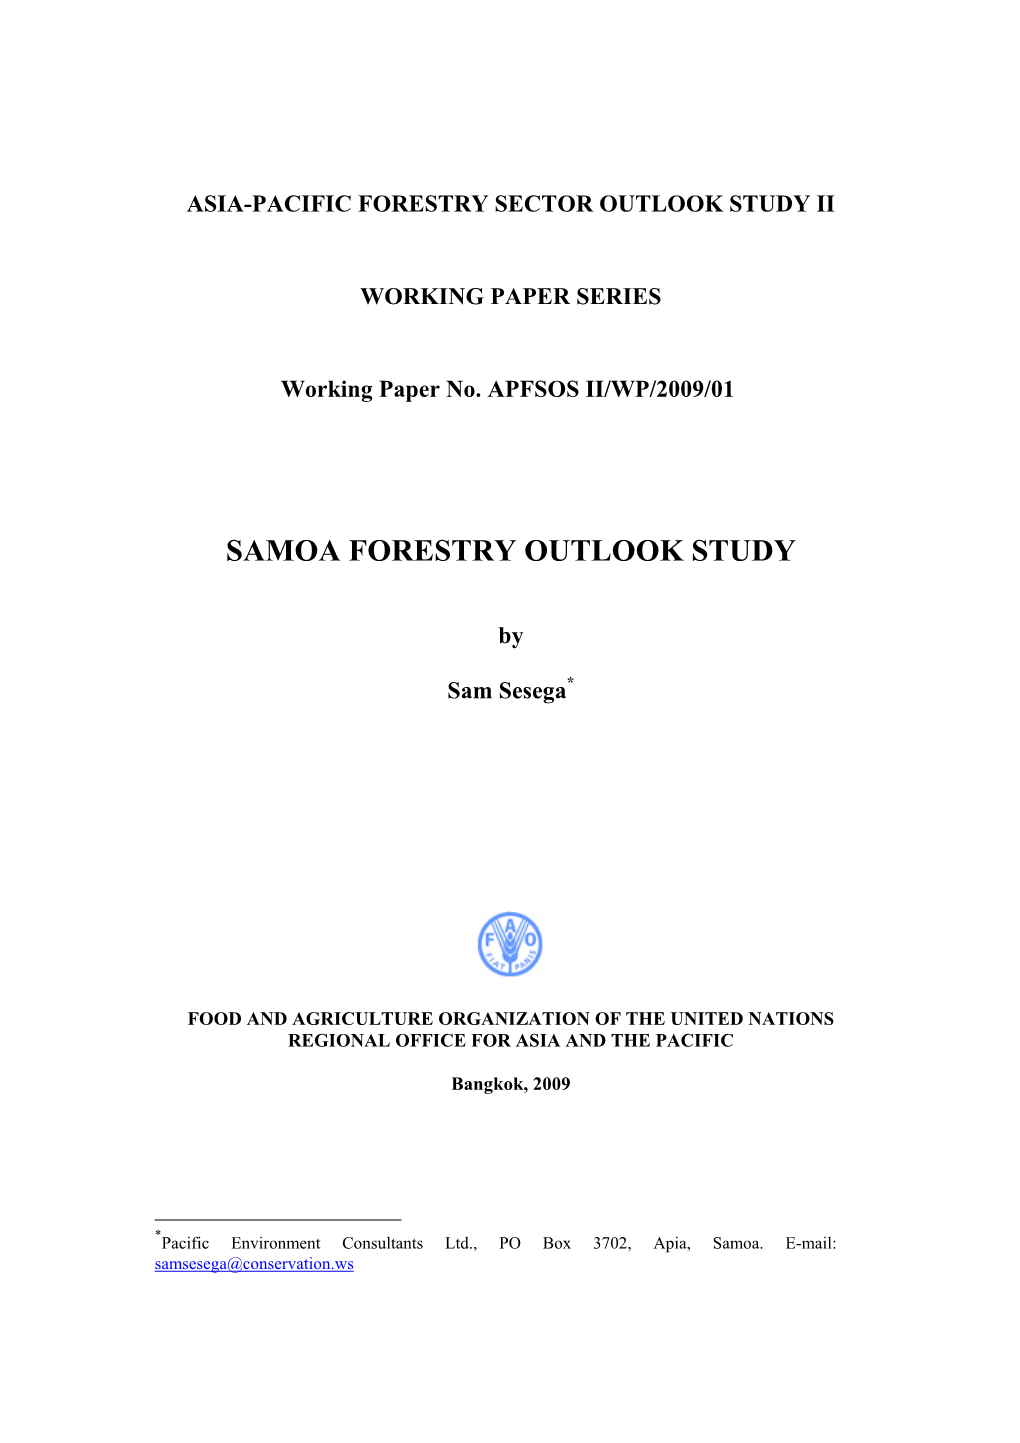 Samoa Forestry Outlook Study